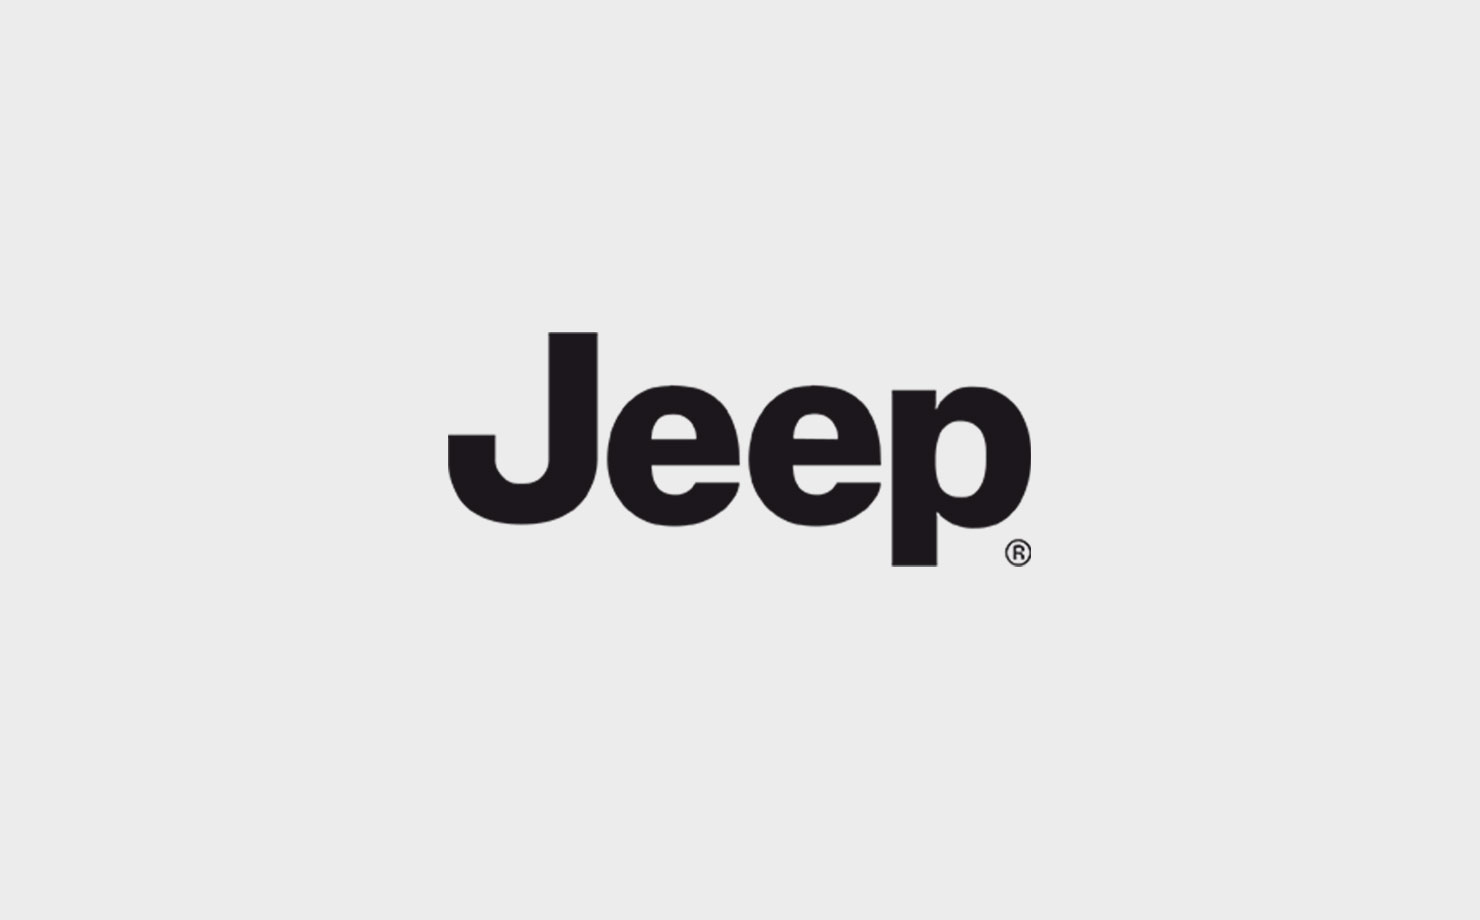 Image of Jeep logo